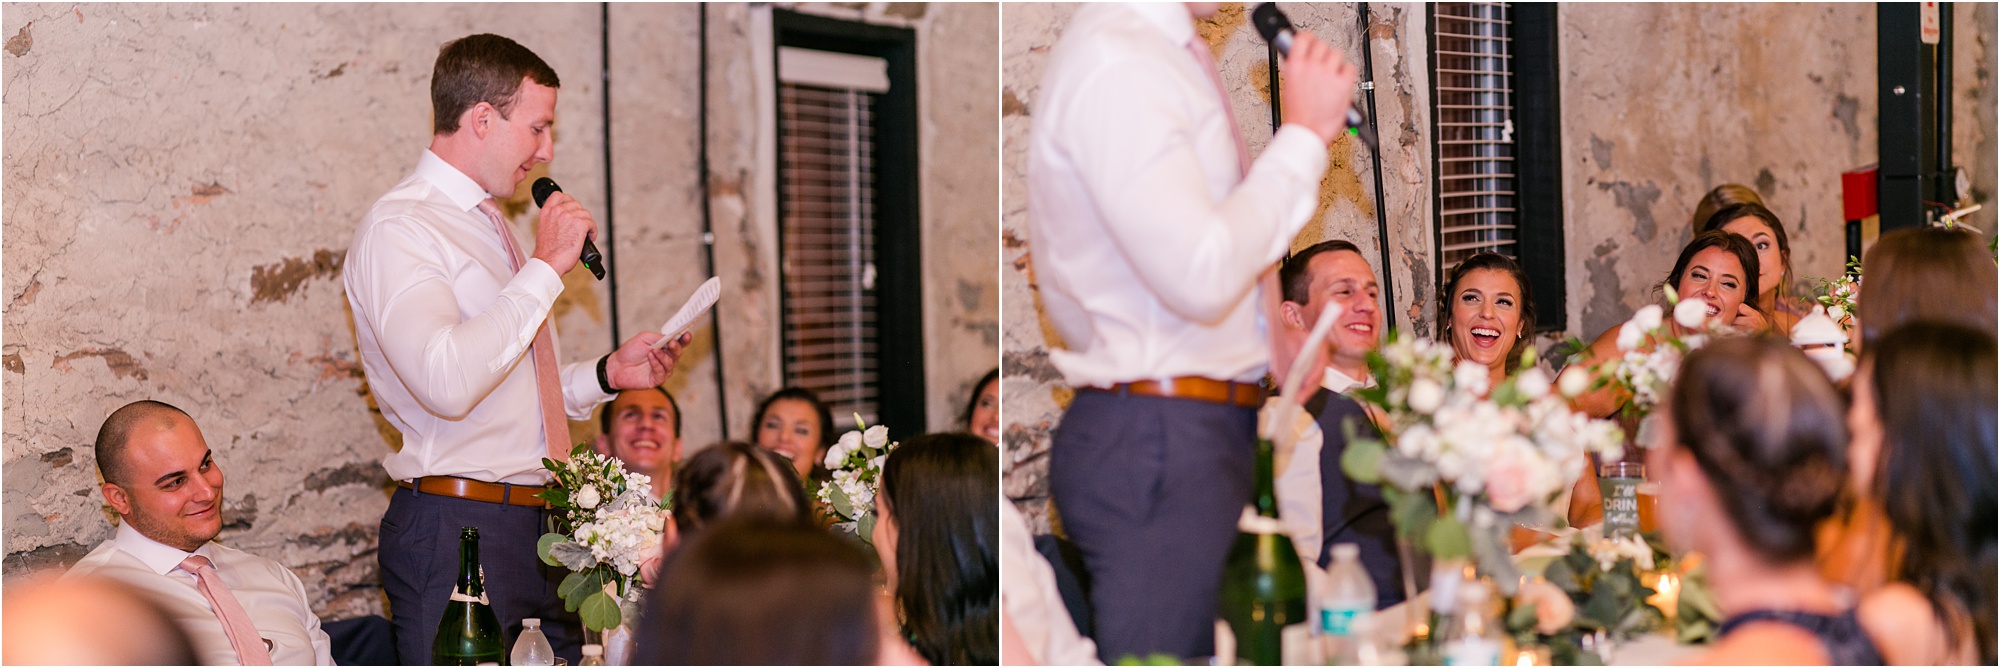 rock barn canton ga macon ga wedding photographer reception dancing toasts